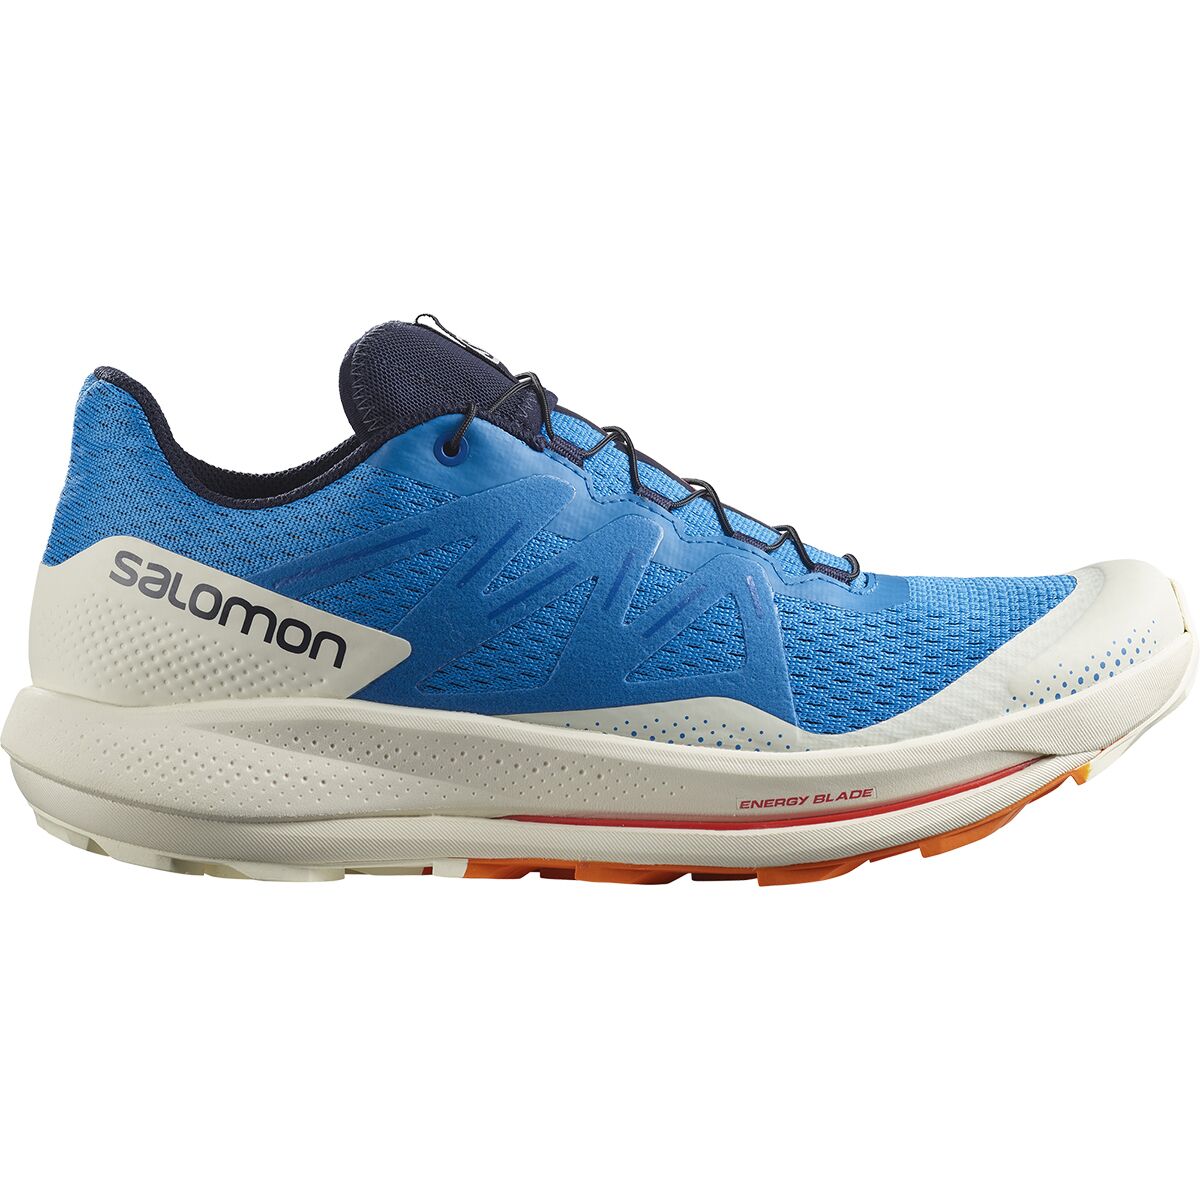 Salomon Pulsar Trail Running Shoe - Men's